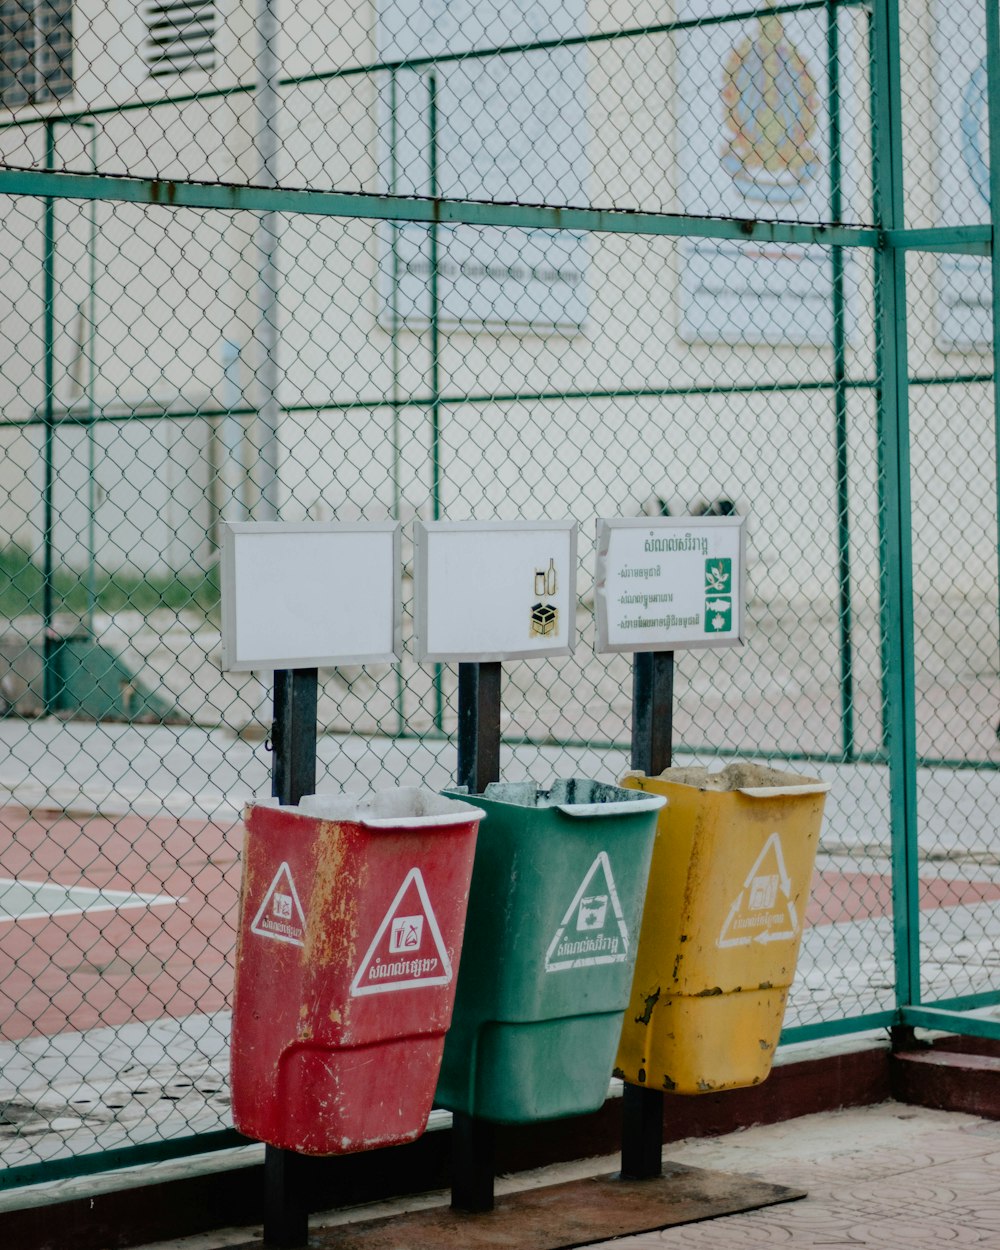 red and white trash bins